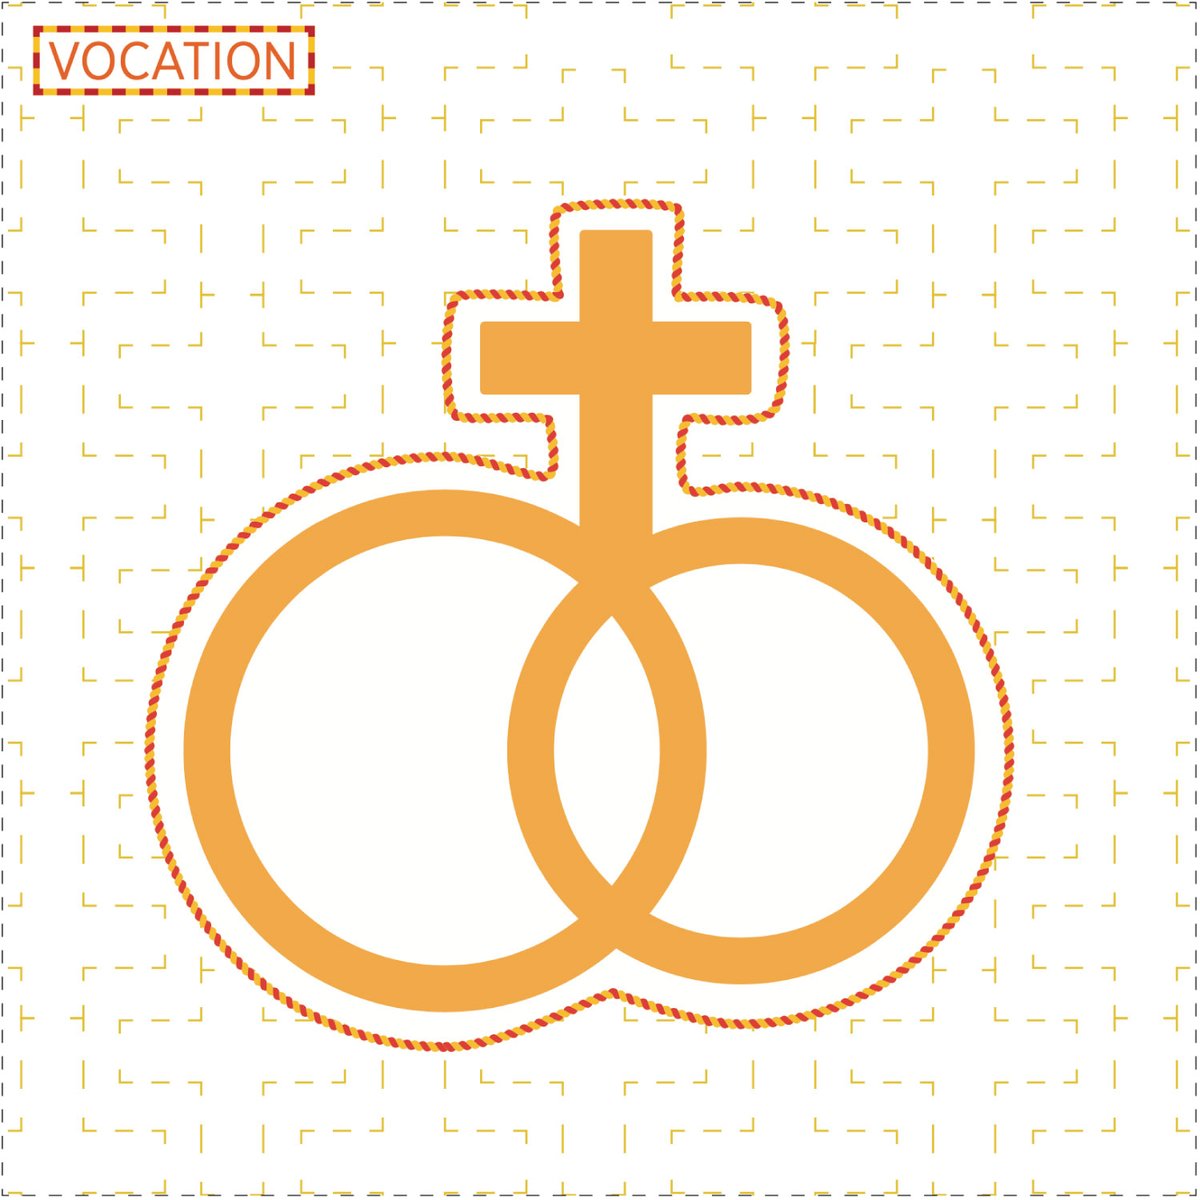 Sadlier-Sacraments-Quilt-Vocation-3